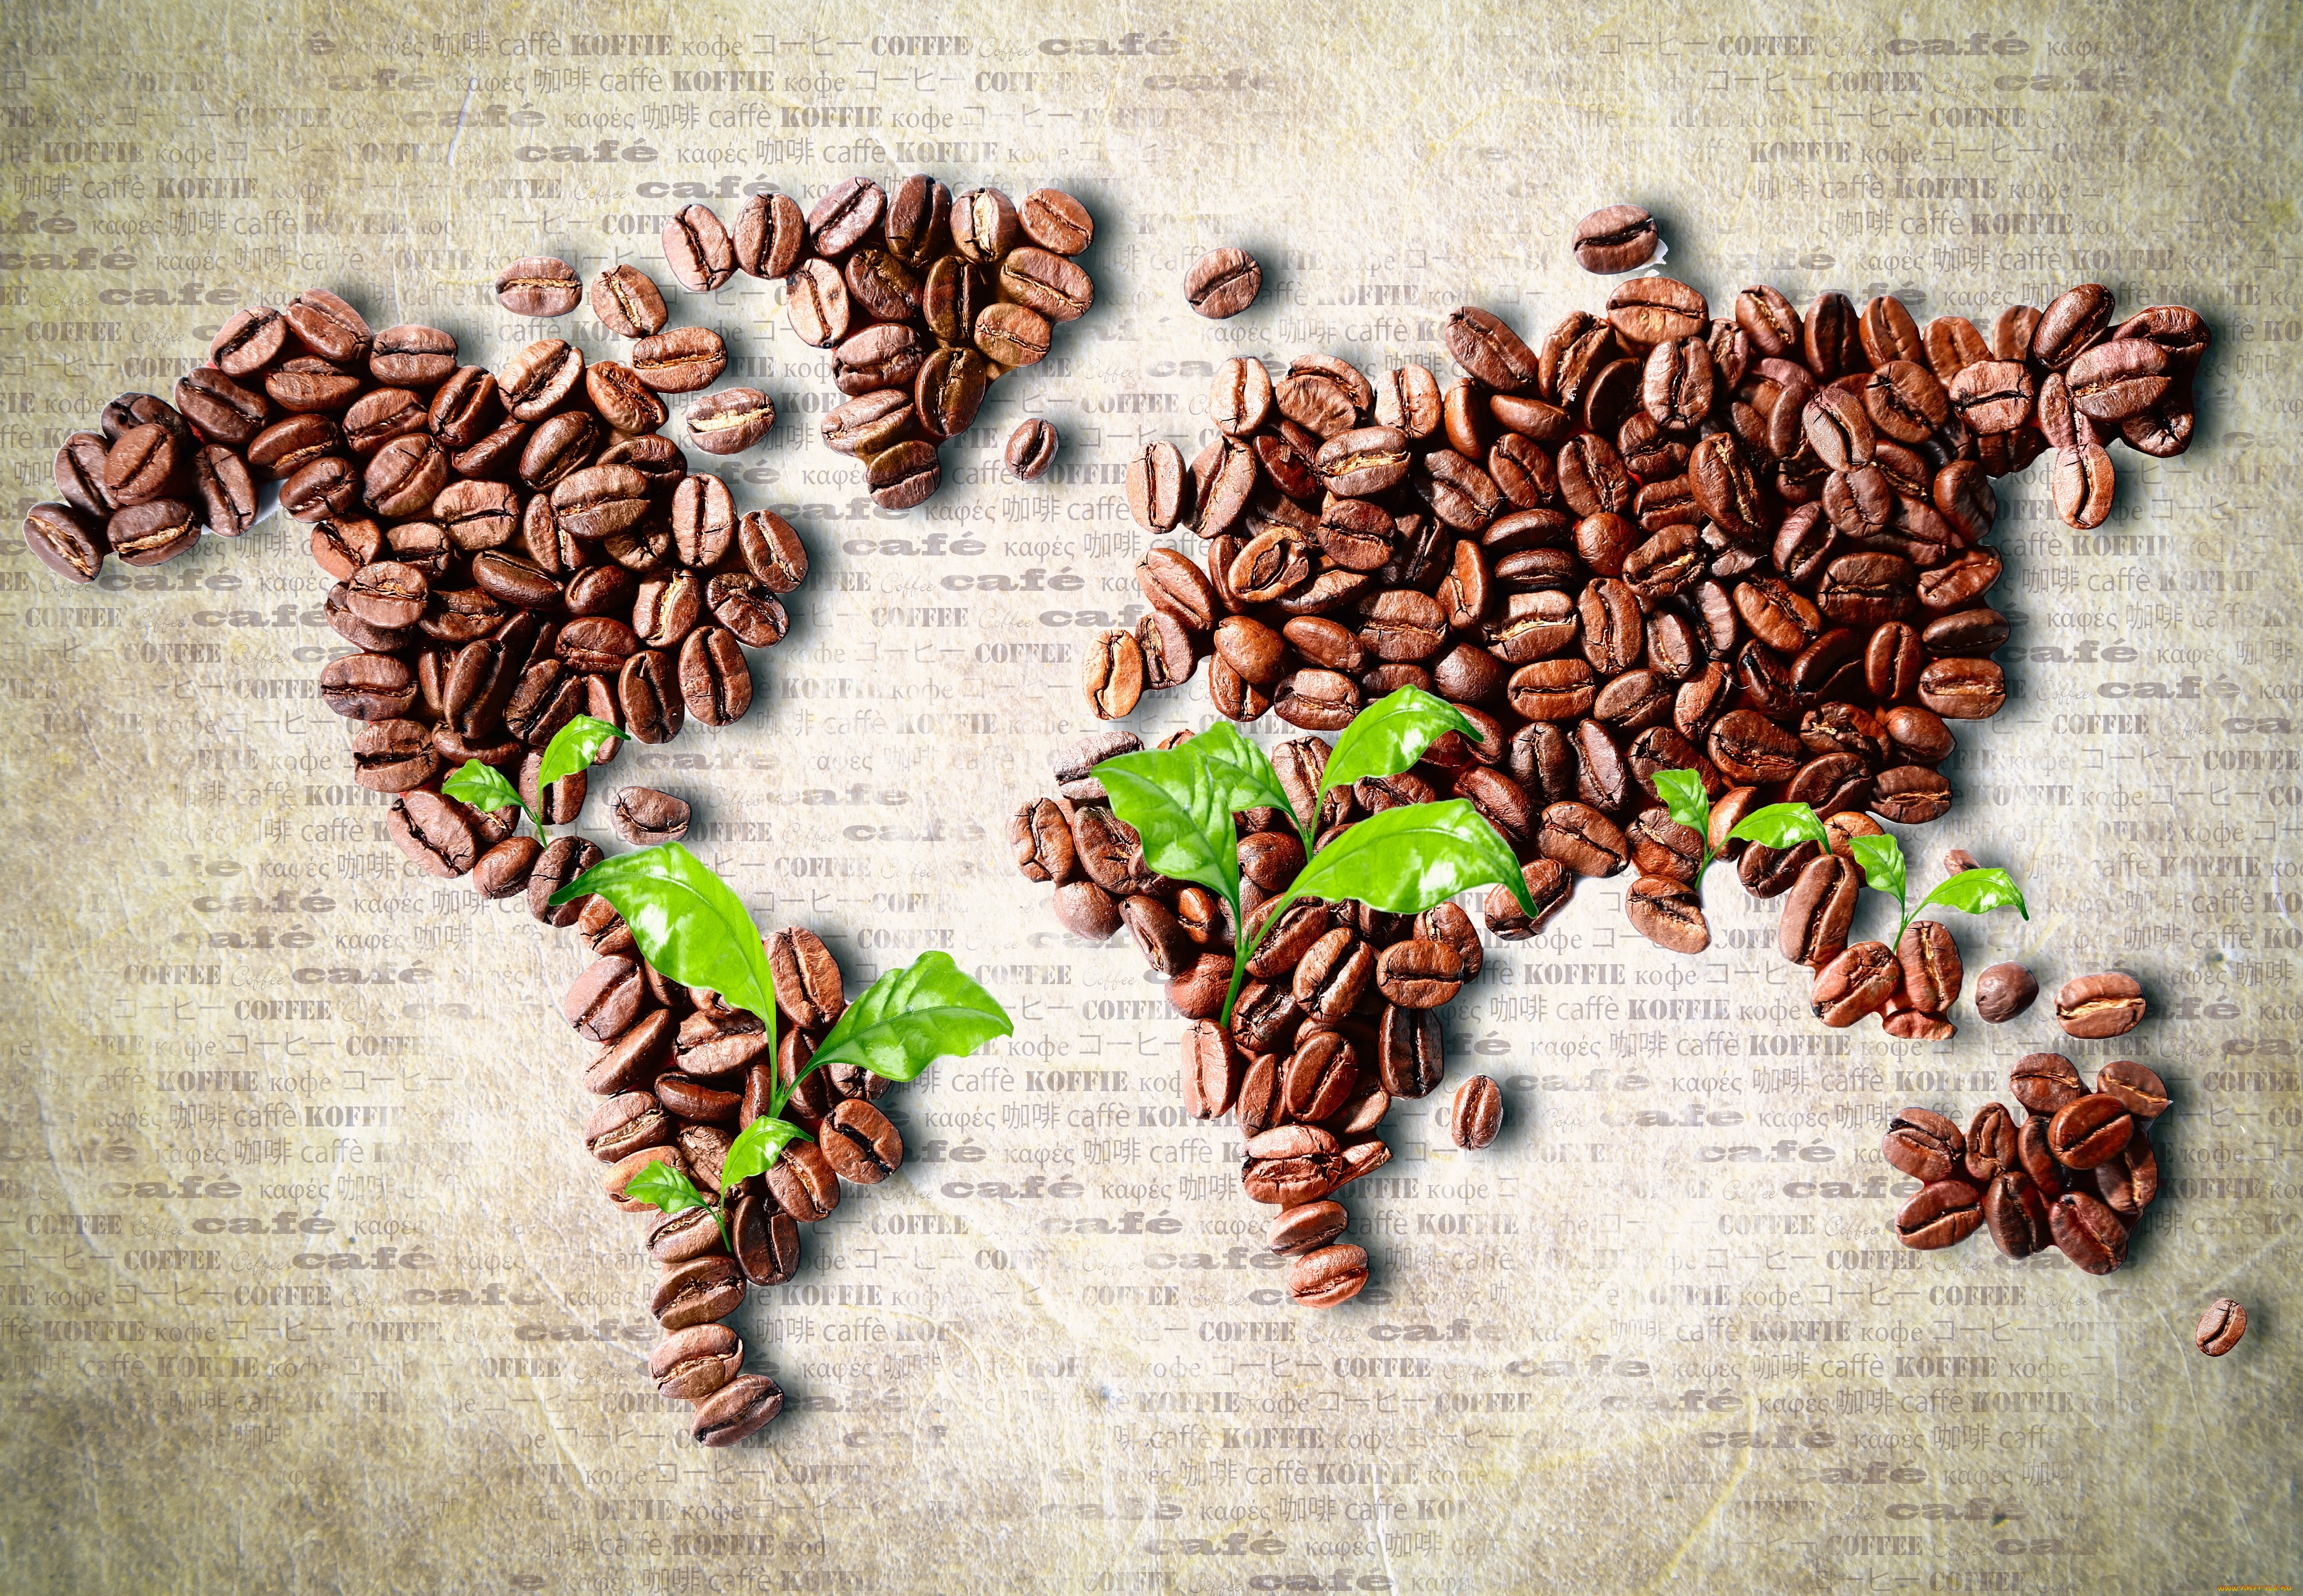 вкус кофе зависит от региона произрастания зерен